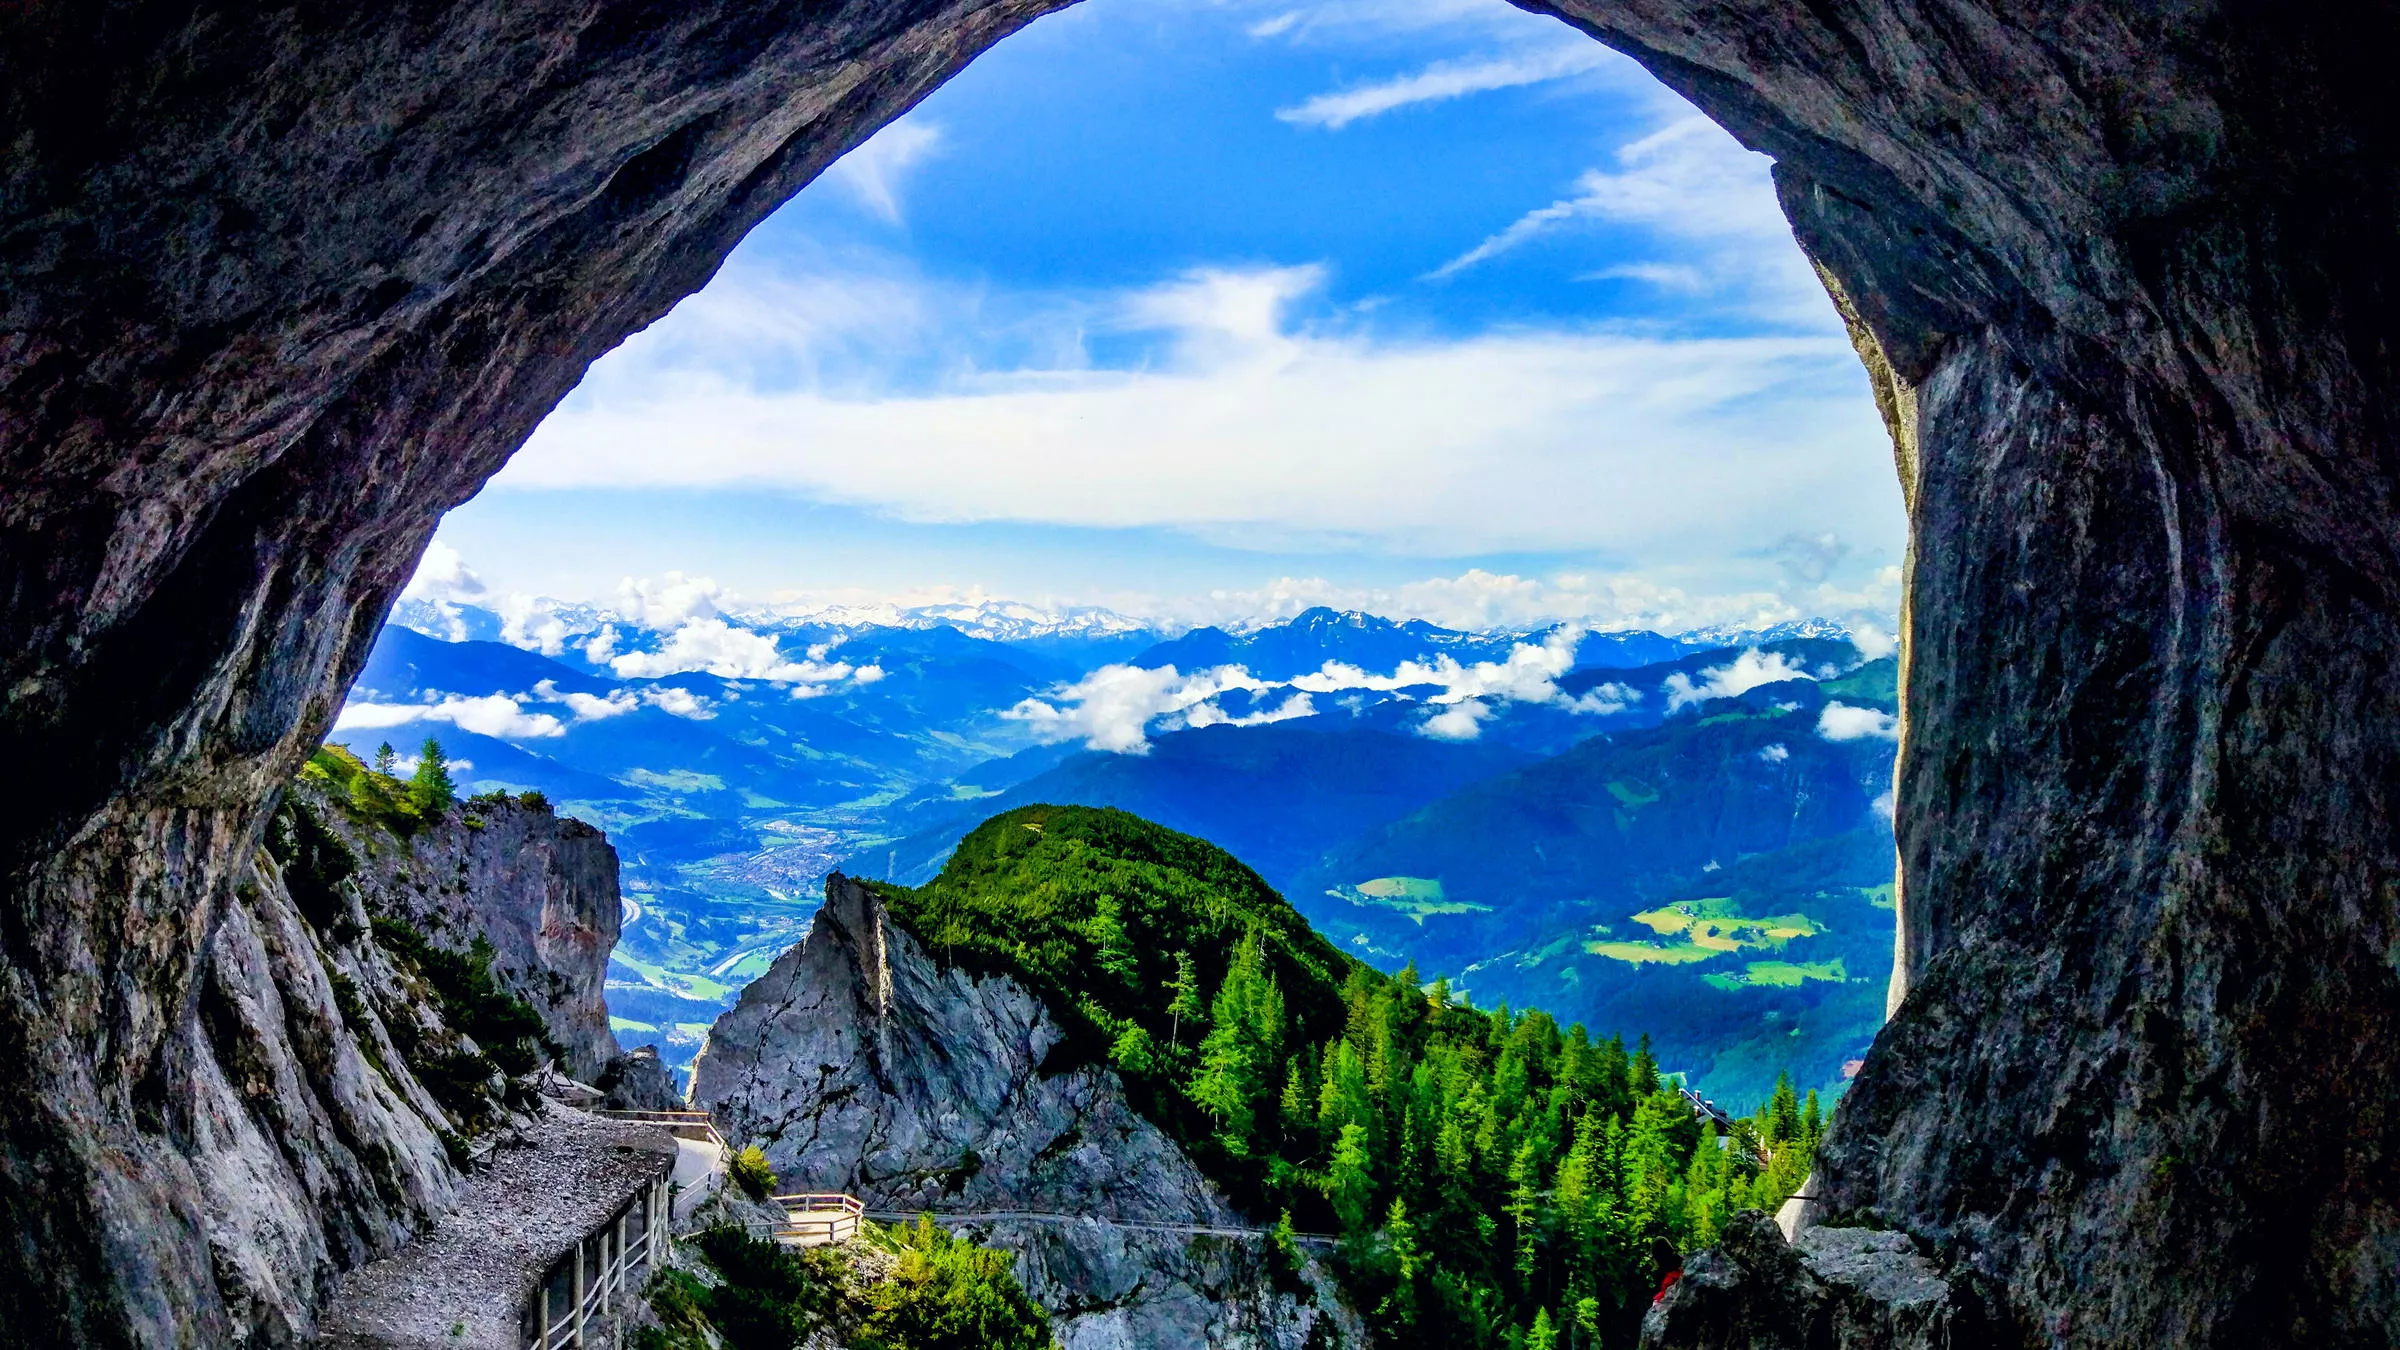 Eisriesenwelt in Austria, Europe | Caves & Underground Places - Rated 4